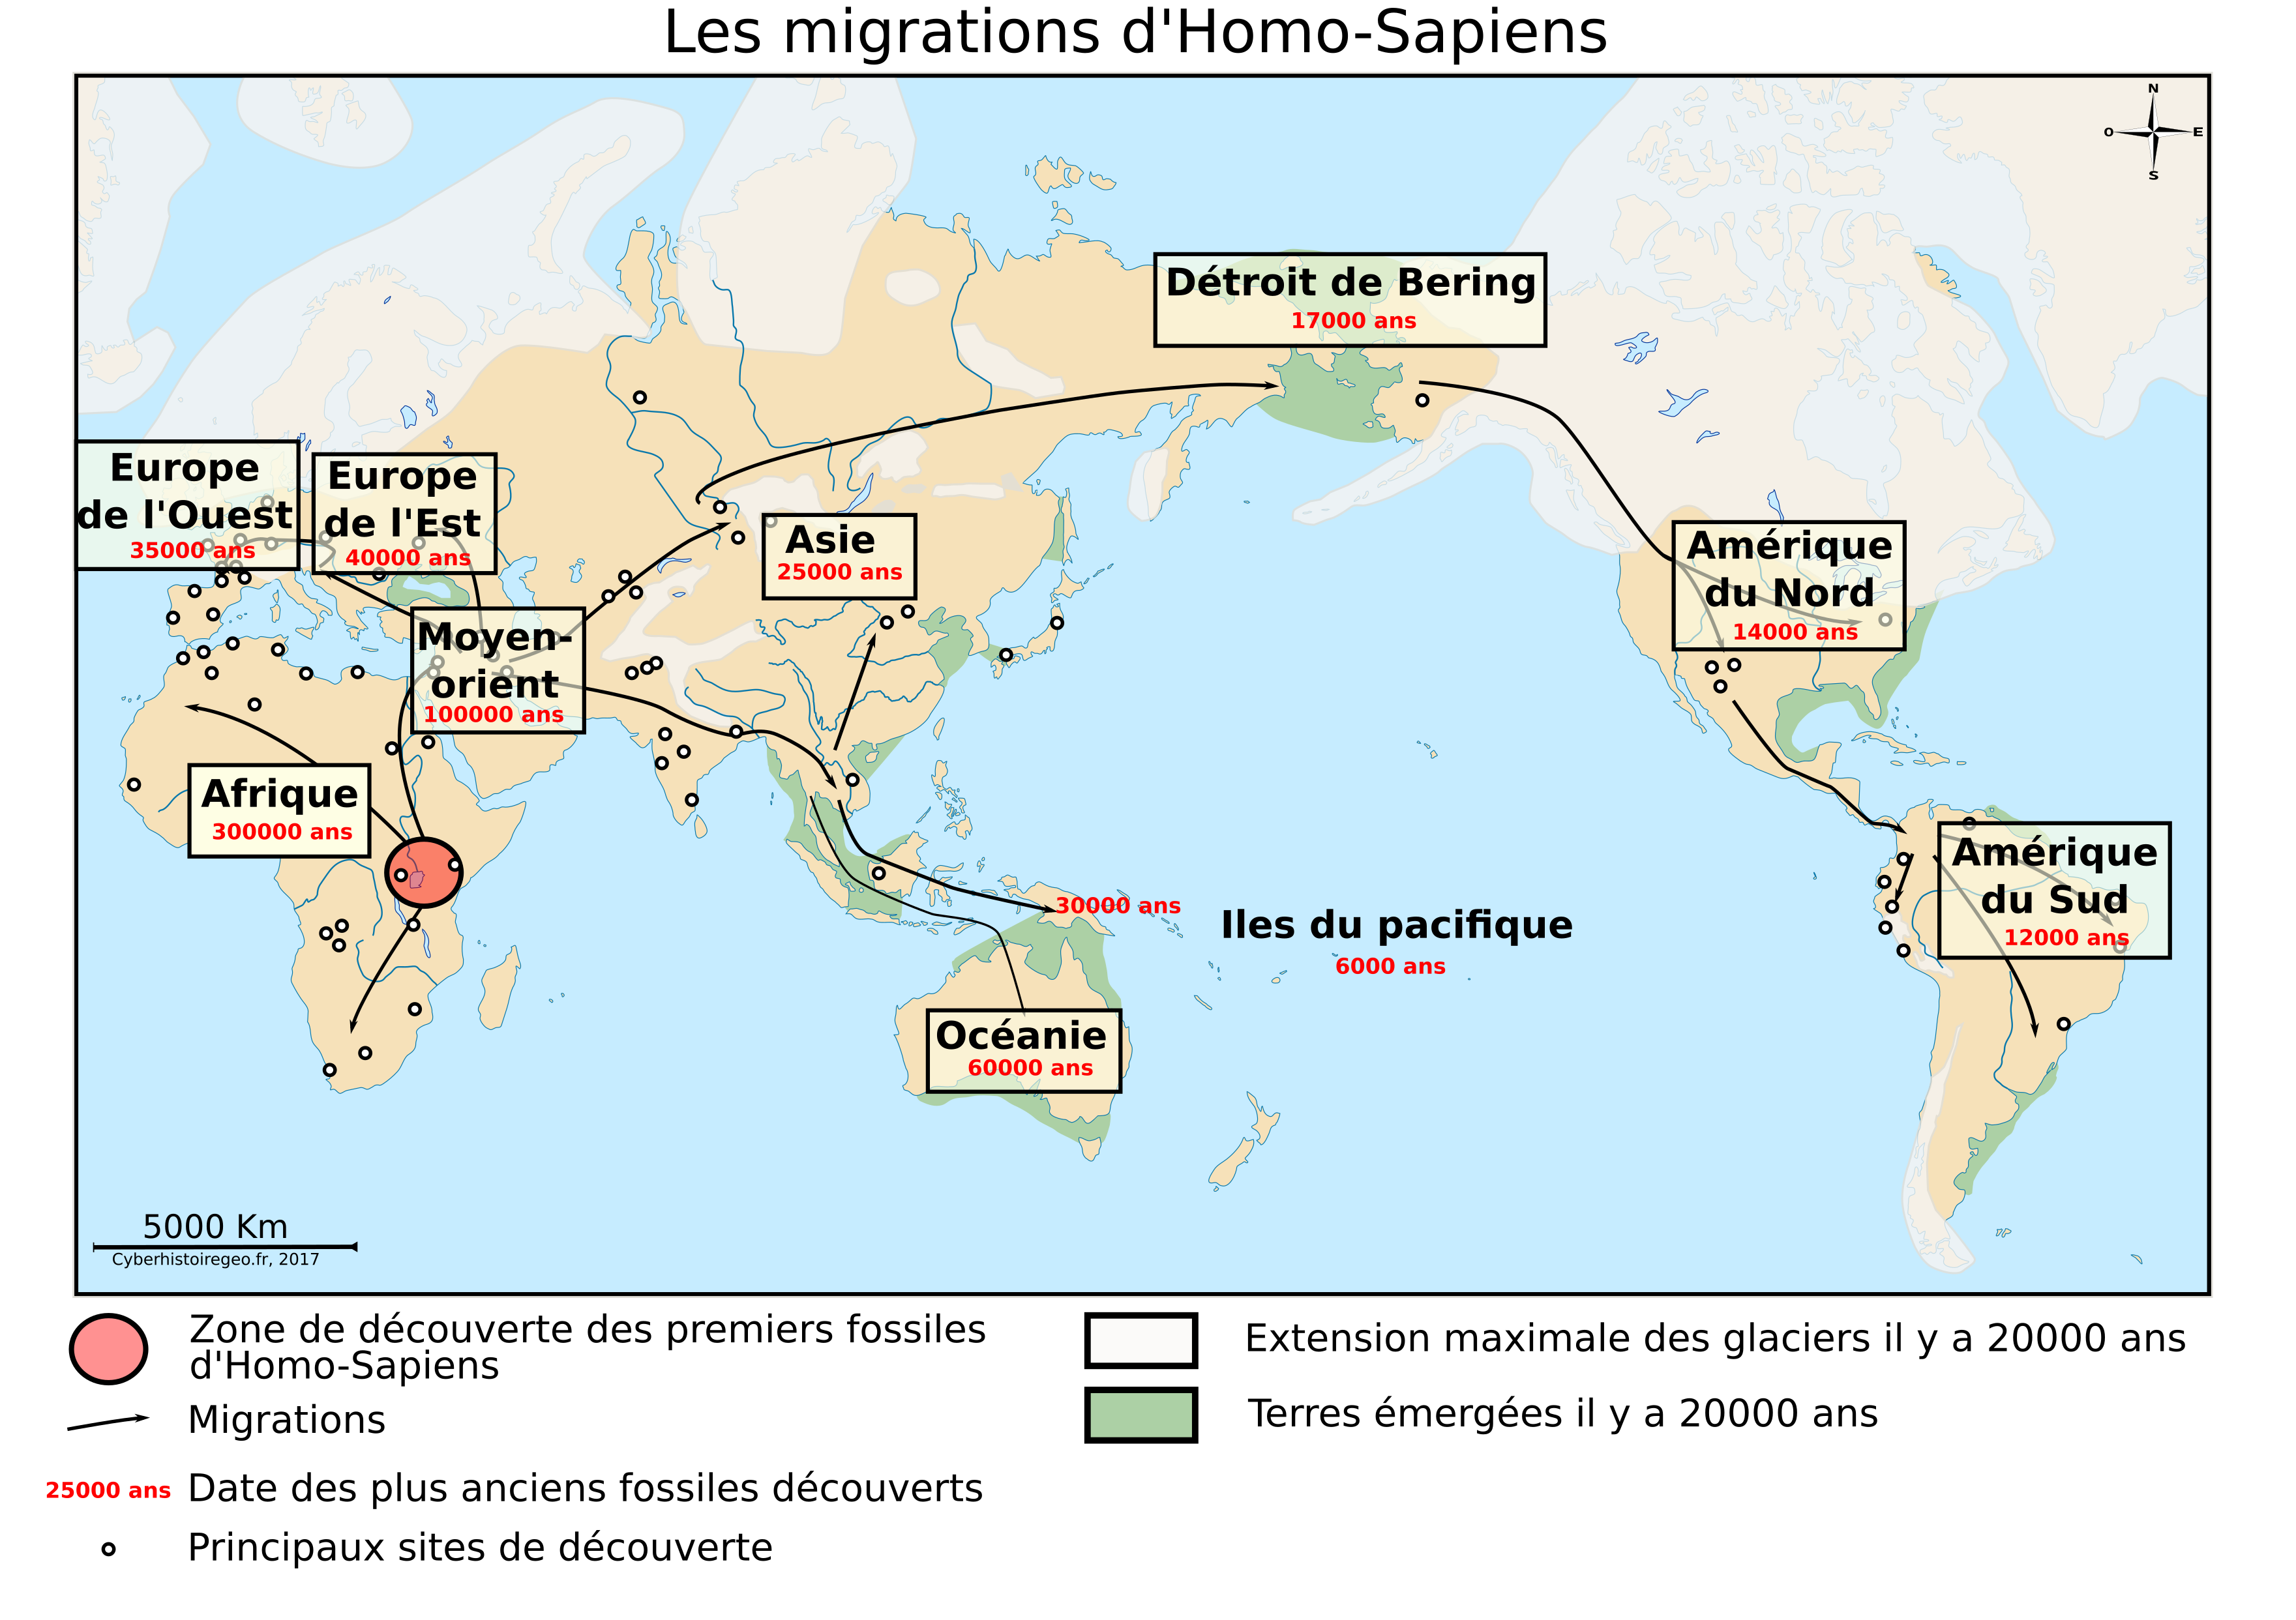 Les migrations d'Homo Sapiens